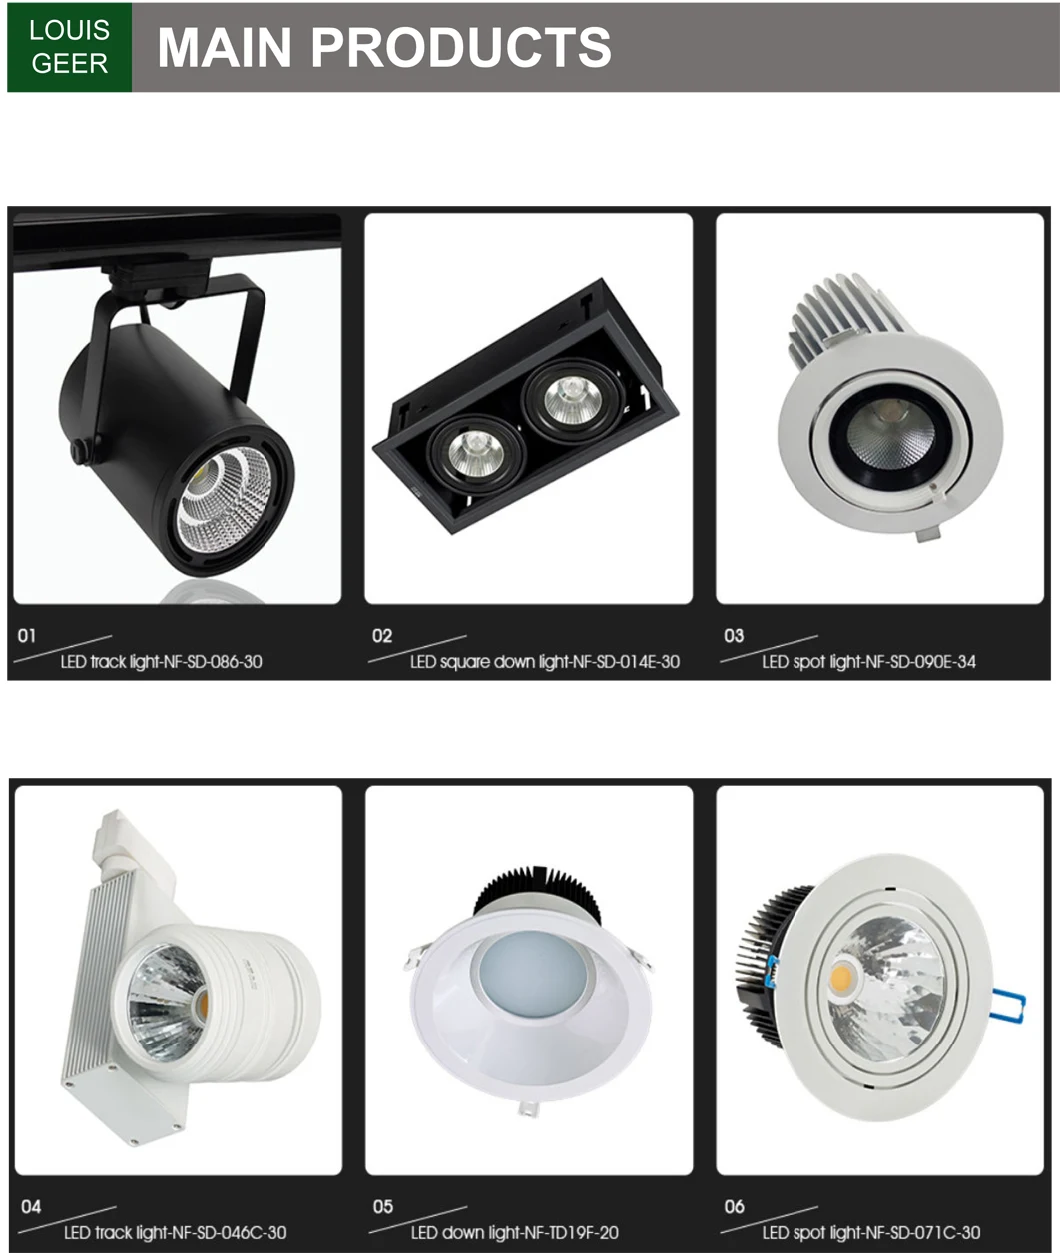 Distributor LED Spot Light 20W Gallery LED Track Lighting